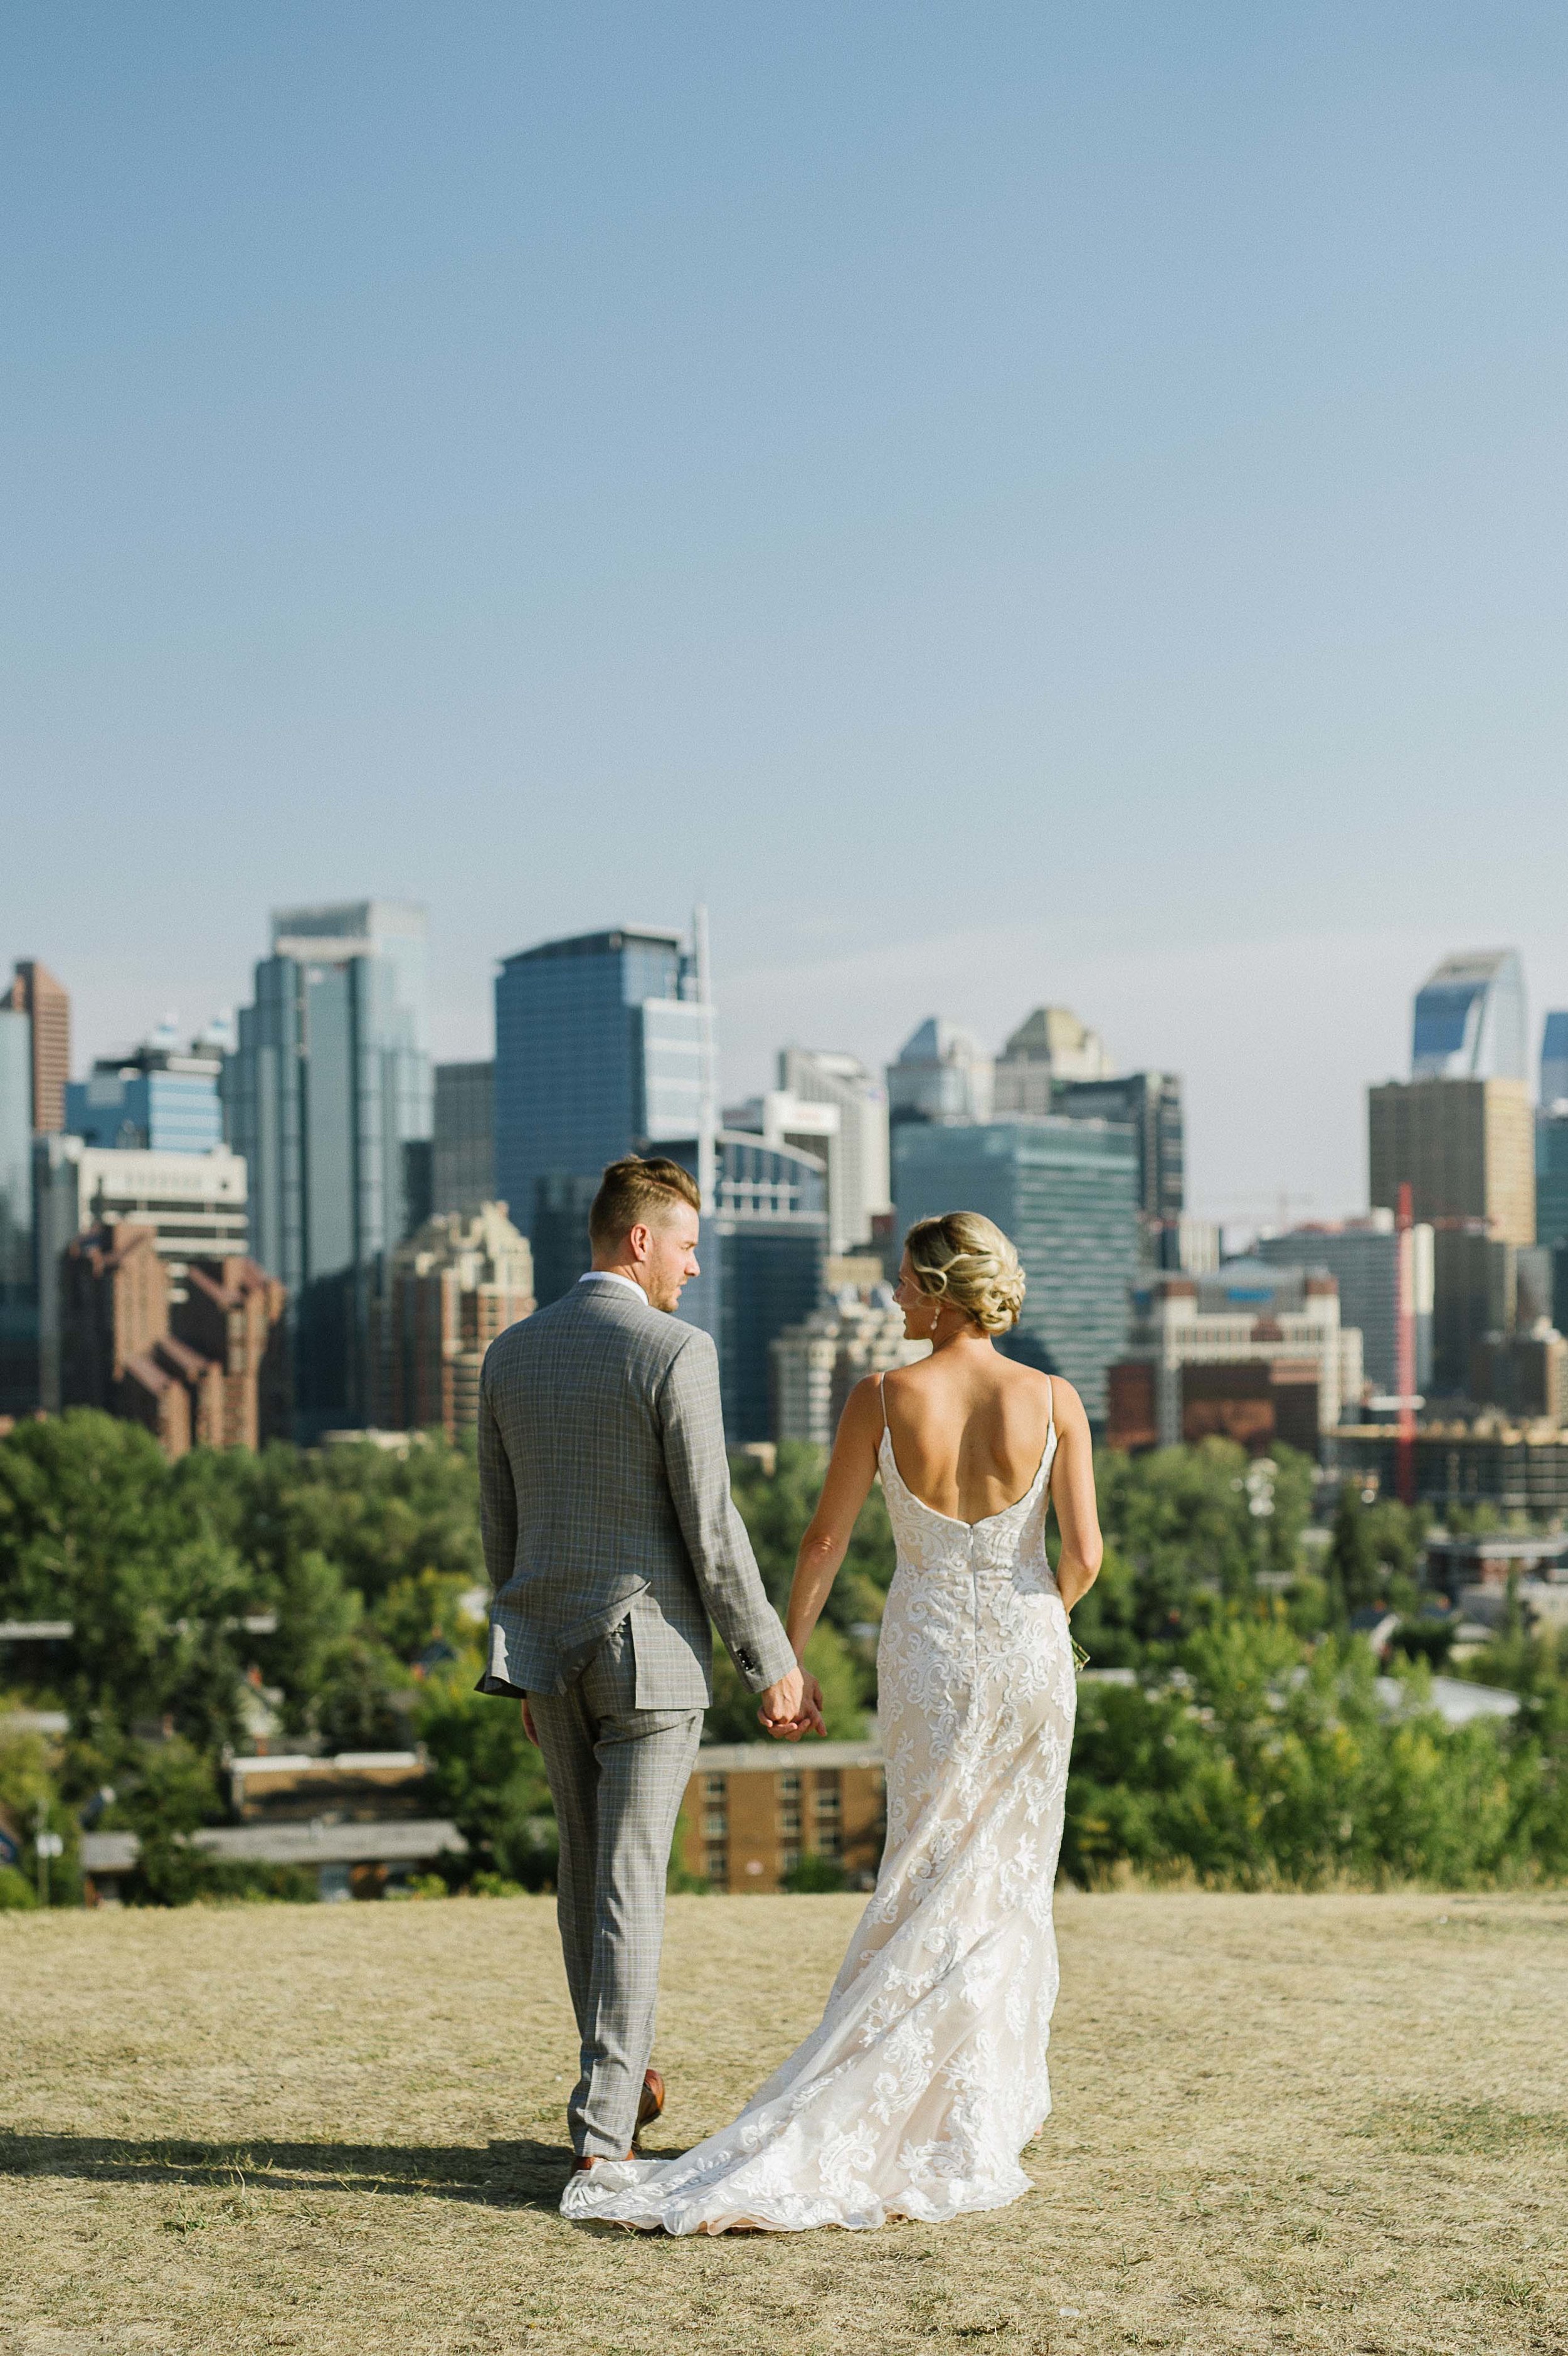 Christy-D-Swanberg-Photography-Calgary-wedding-elopement-22.jpg